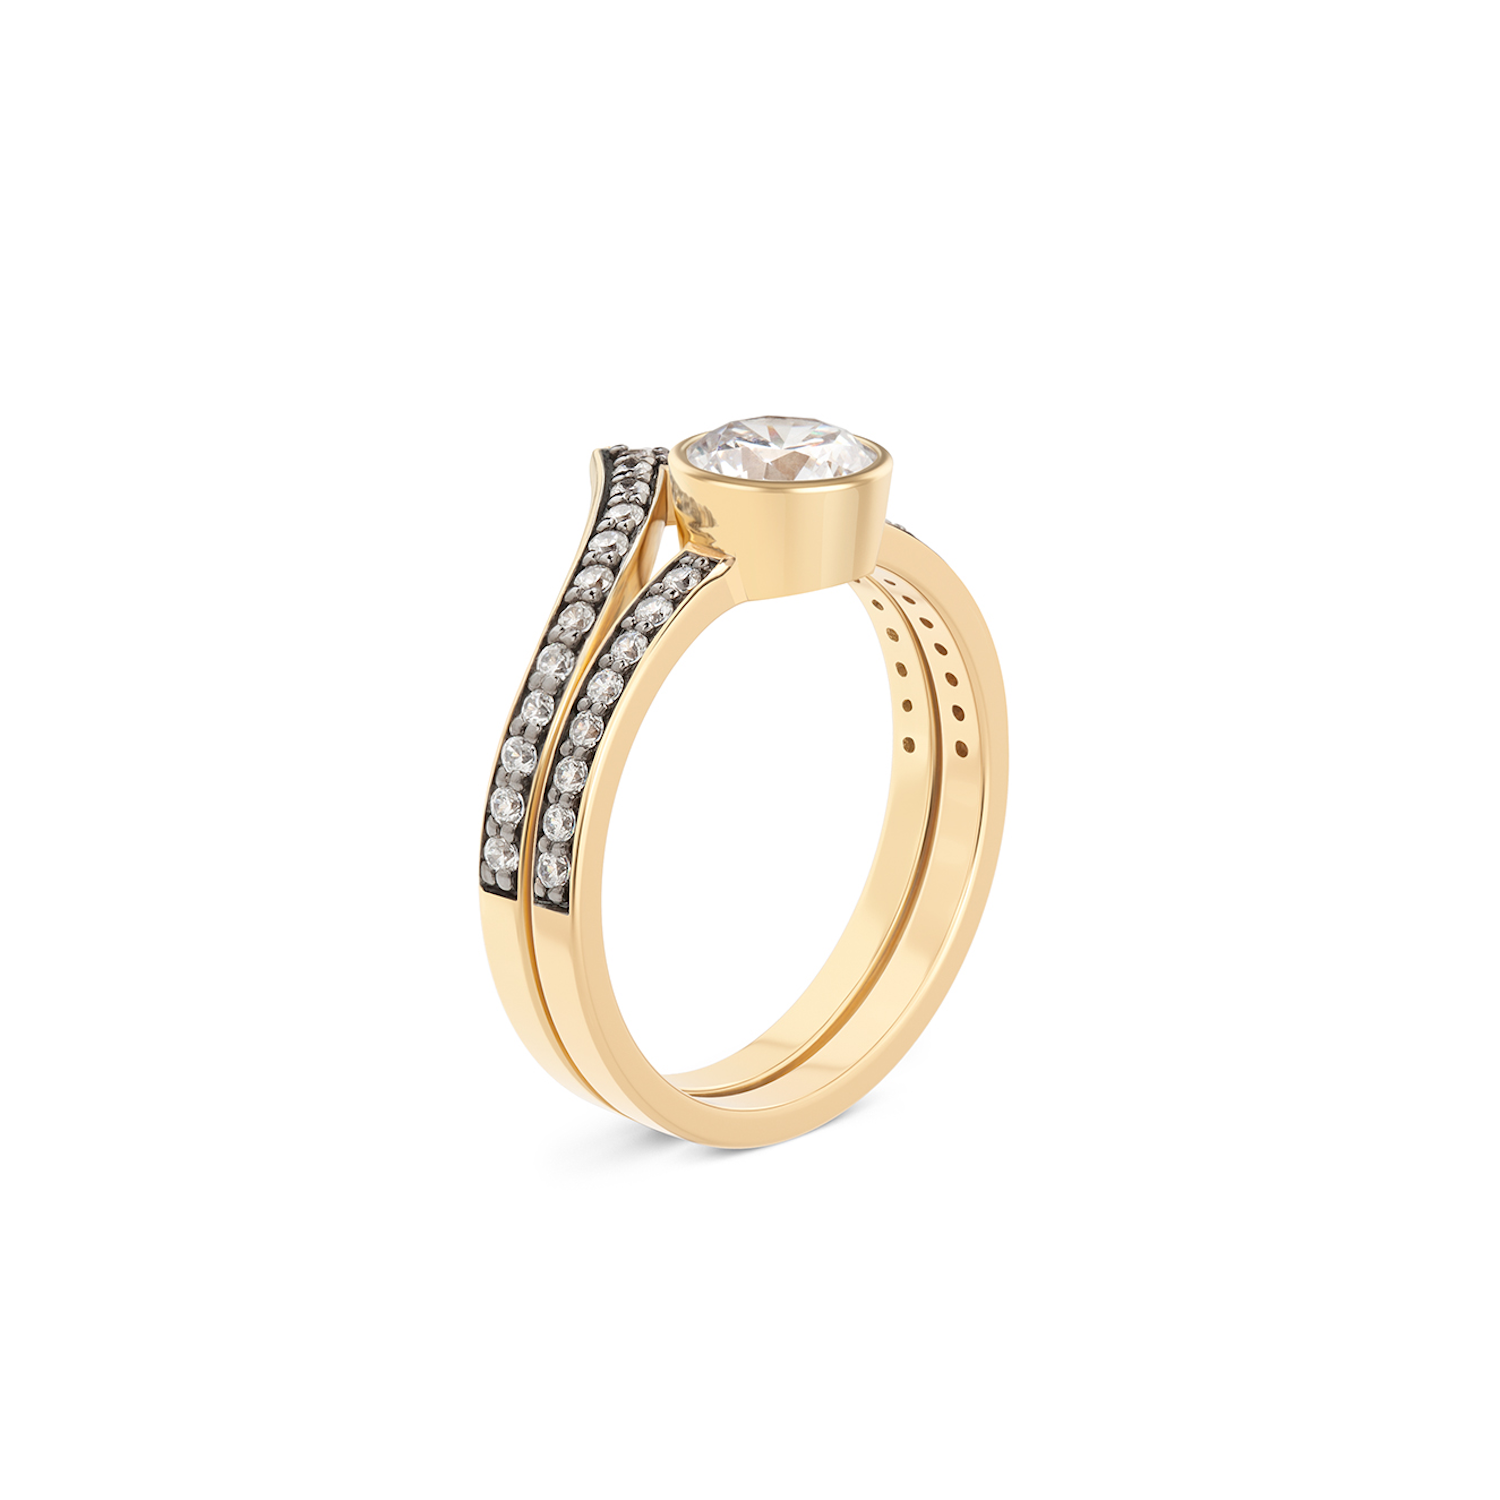 Cleopatra Chevron Diamond Ring Set. 18k Yellow Gold - MONARC CONCIERGE